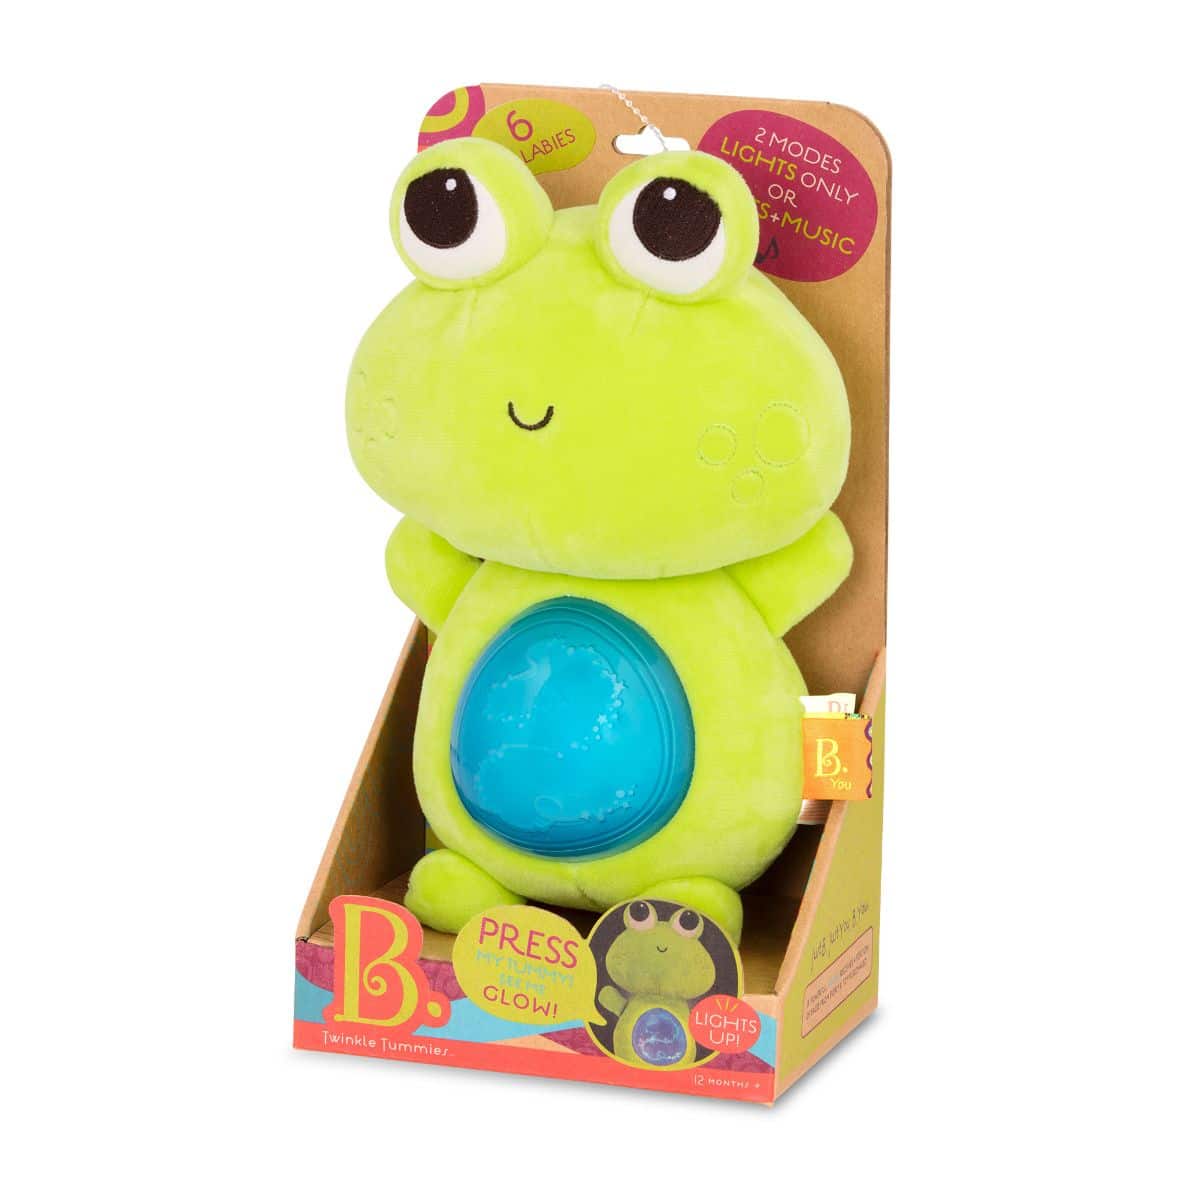 Light-up musical frog plushie